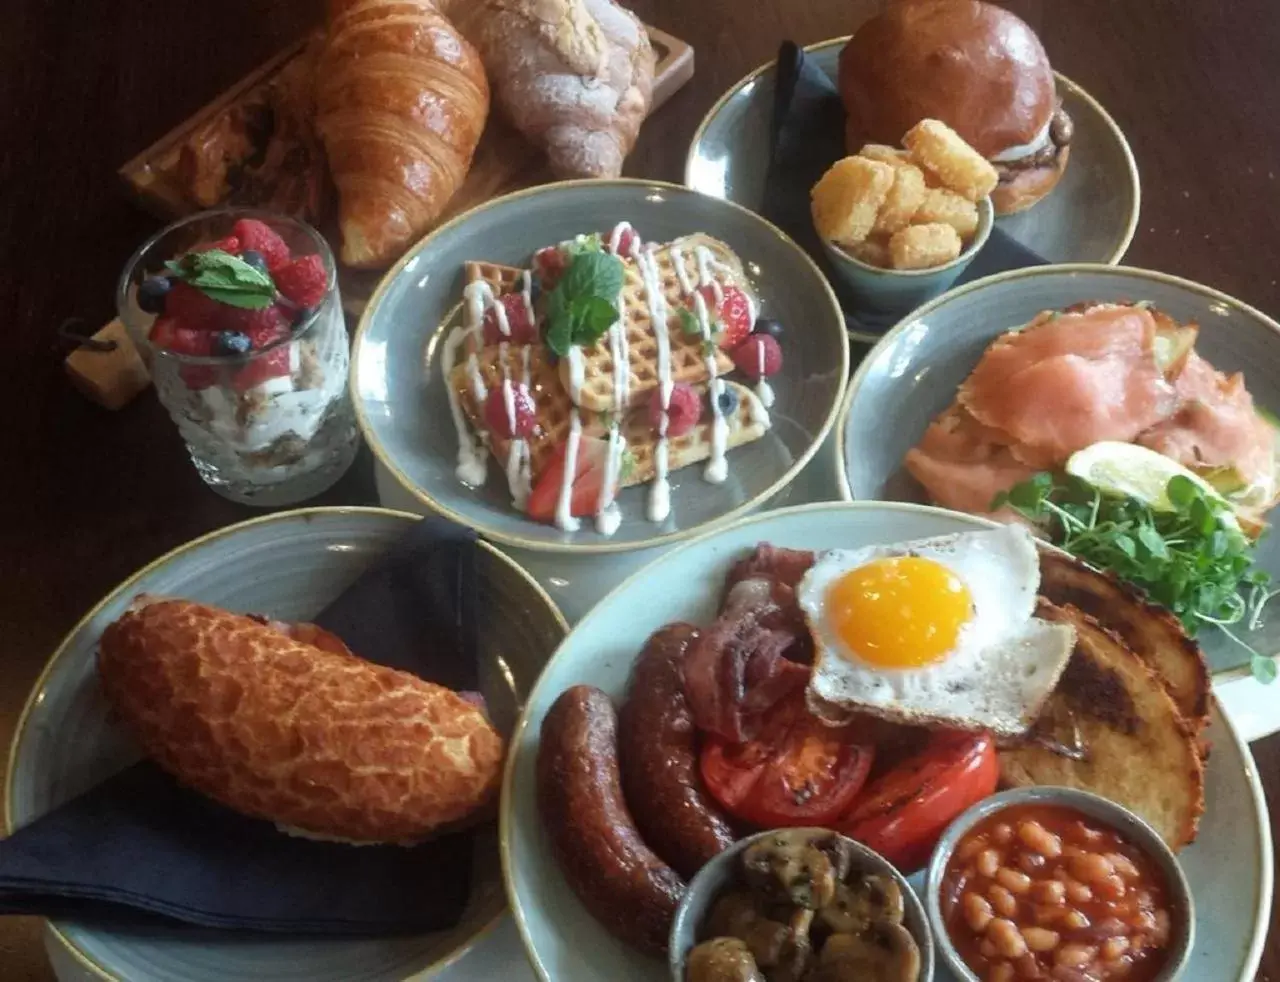 Continental breakfast in PubLove @ The Crown, Battersea